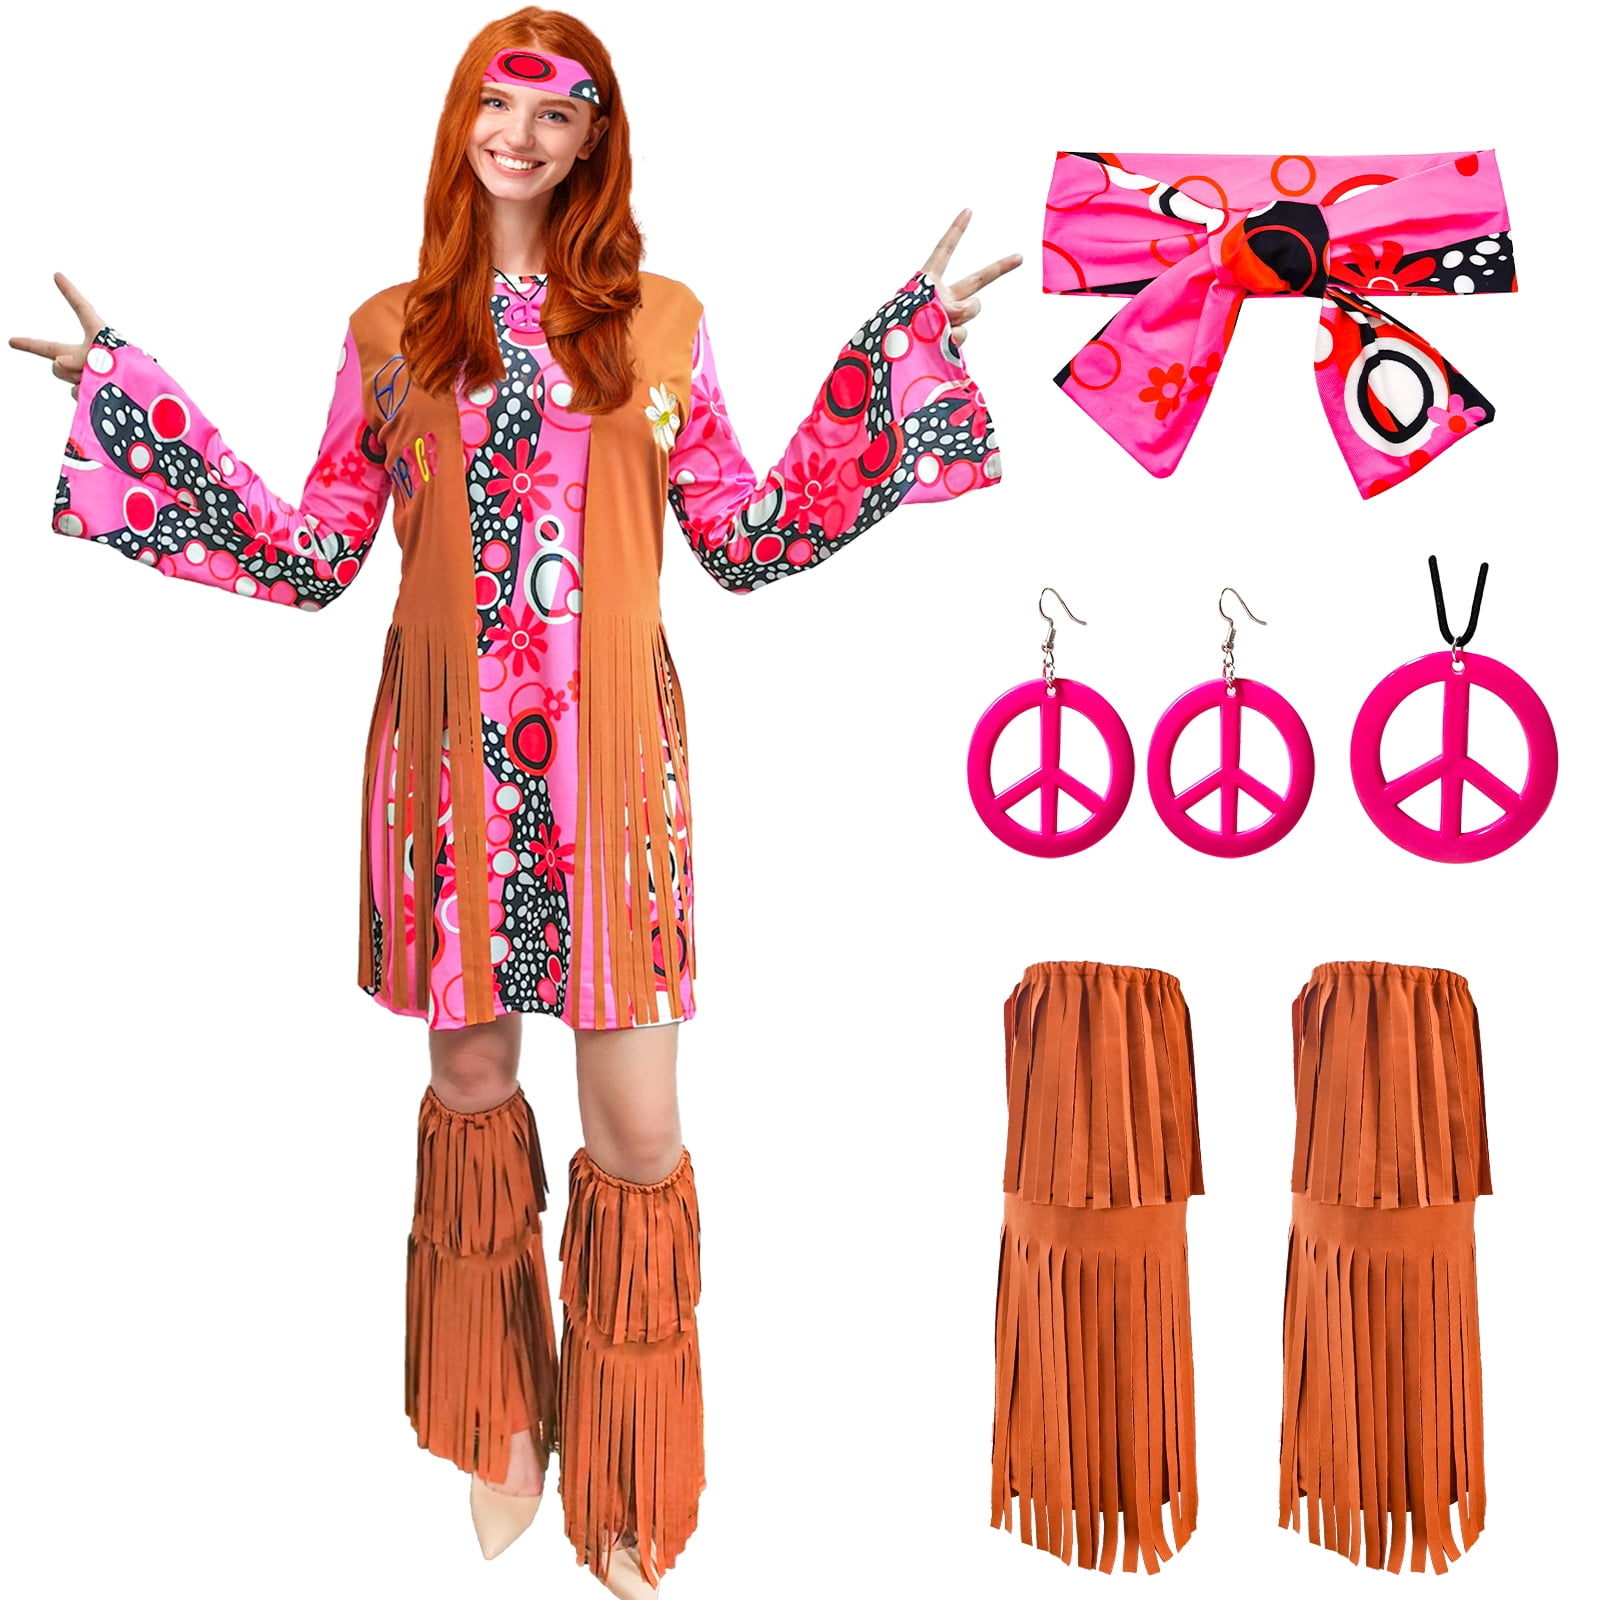 hippy dress